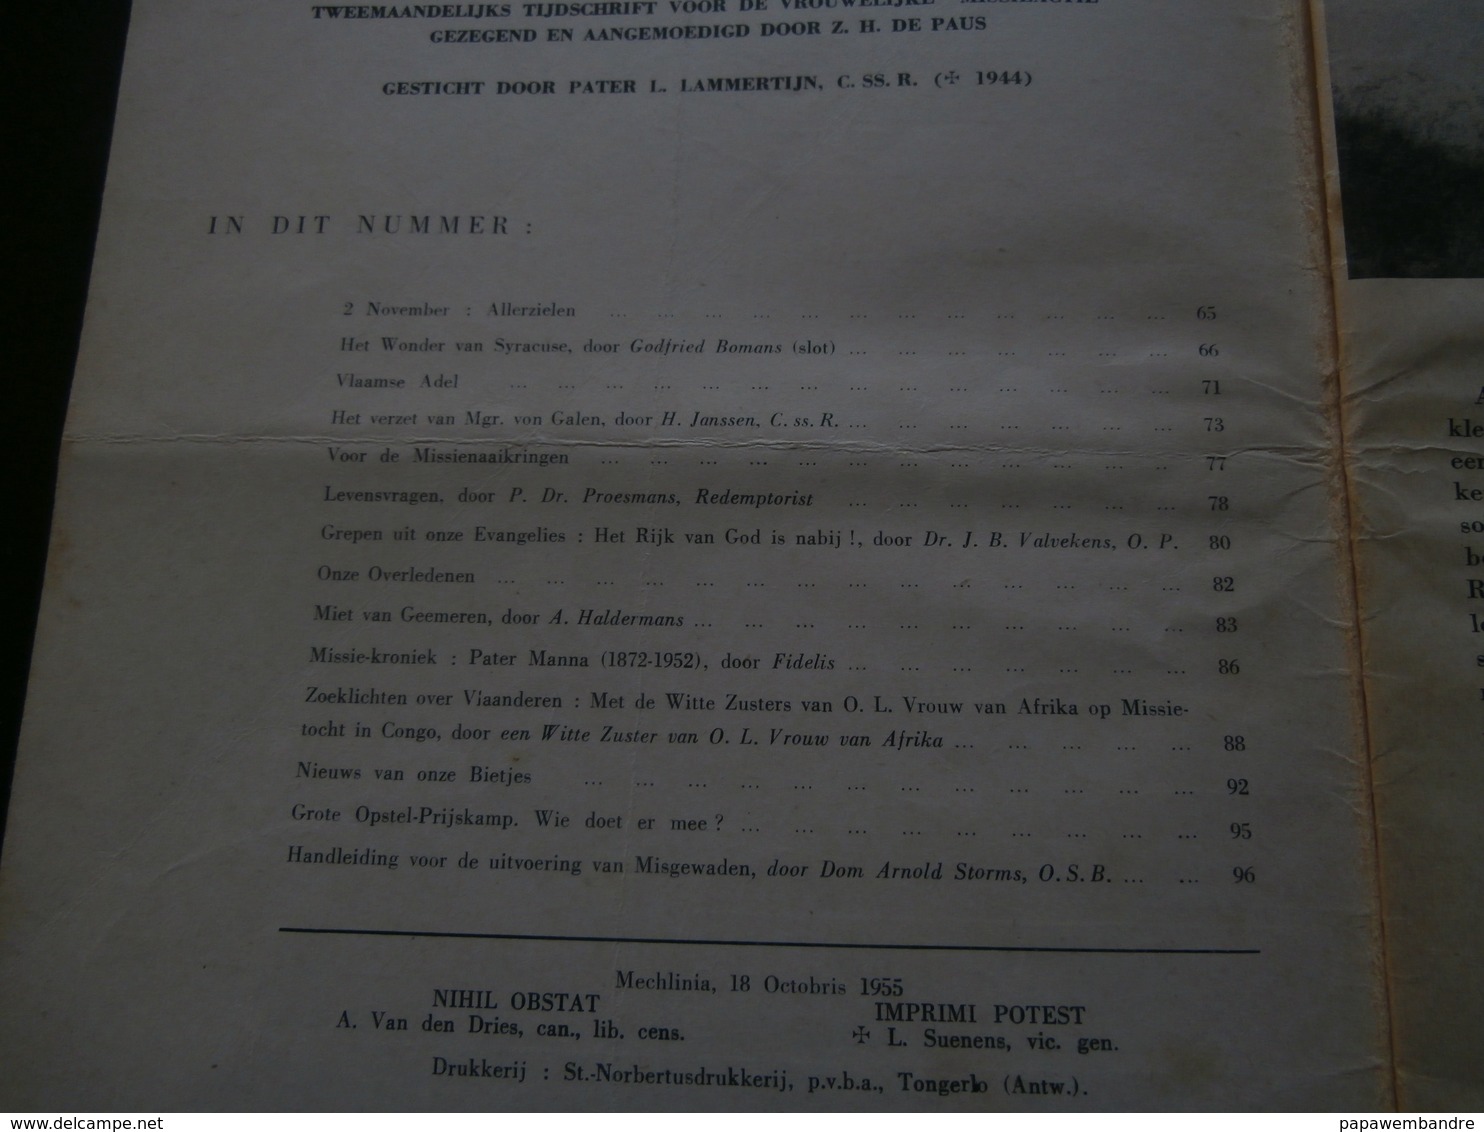 De Ijverige Missiebietjes Nov 1955, Kongo, Kamina, Moerkerke, Pittem, G Bomans - Antique